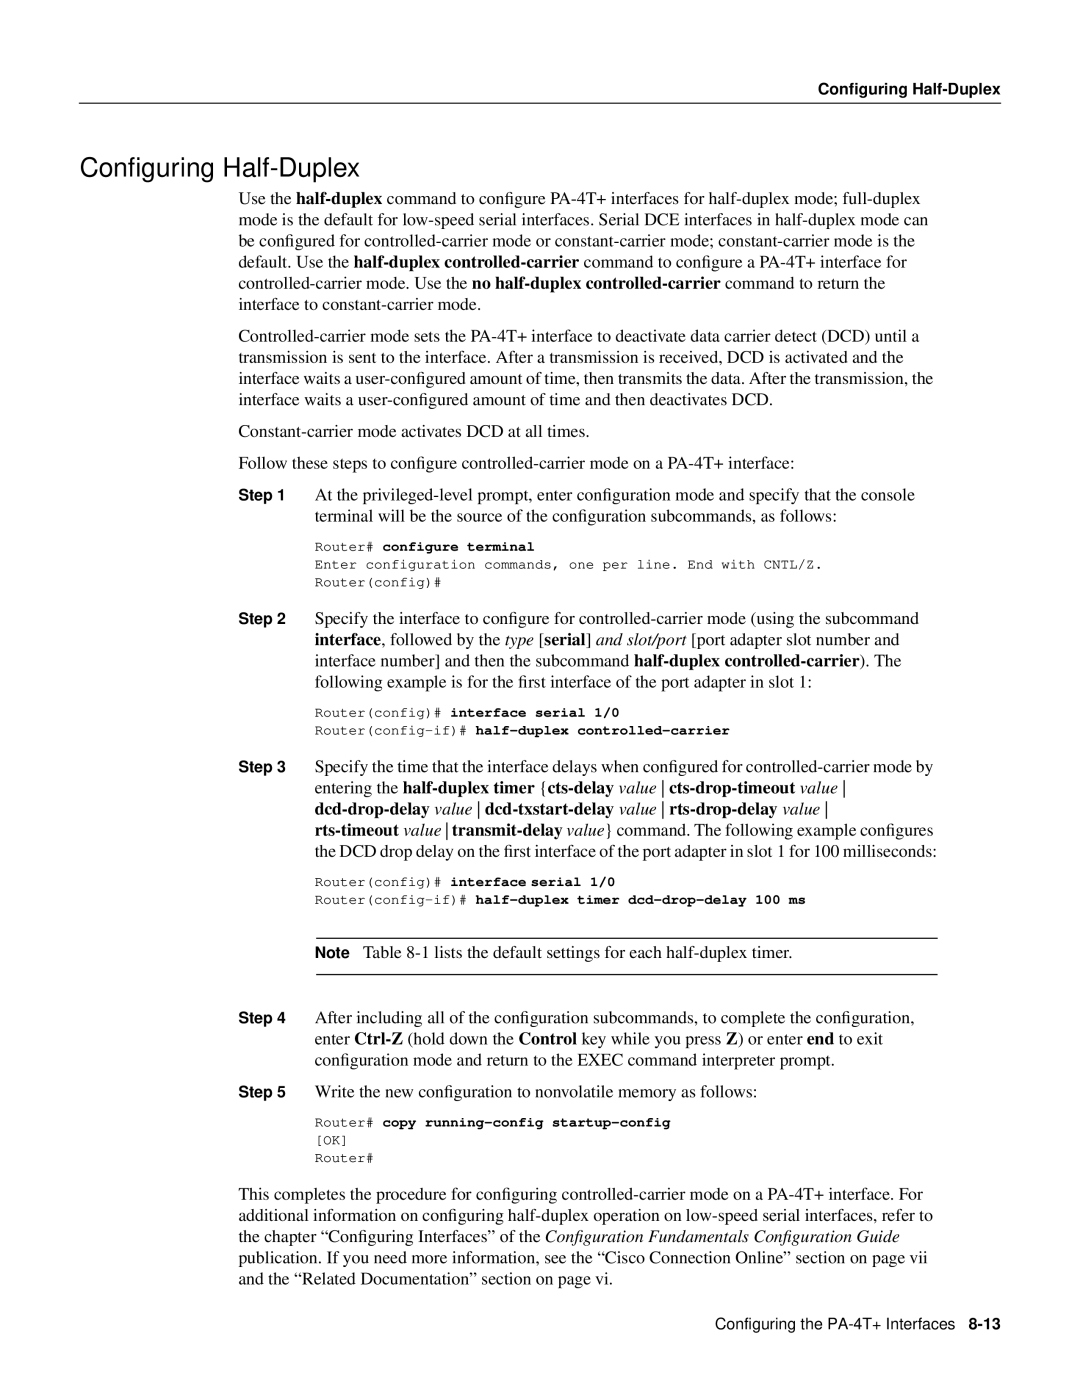 Cisco Systems PA-4T manual Conﬁguring Half-Duplex 